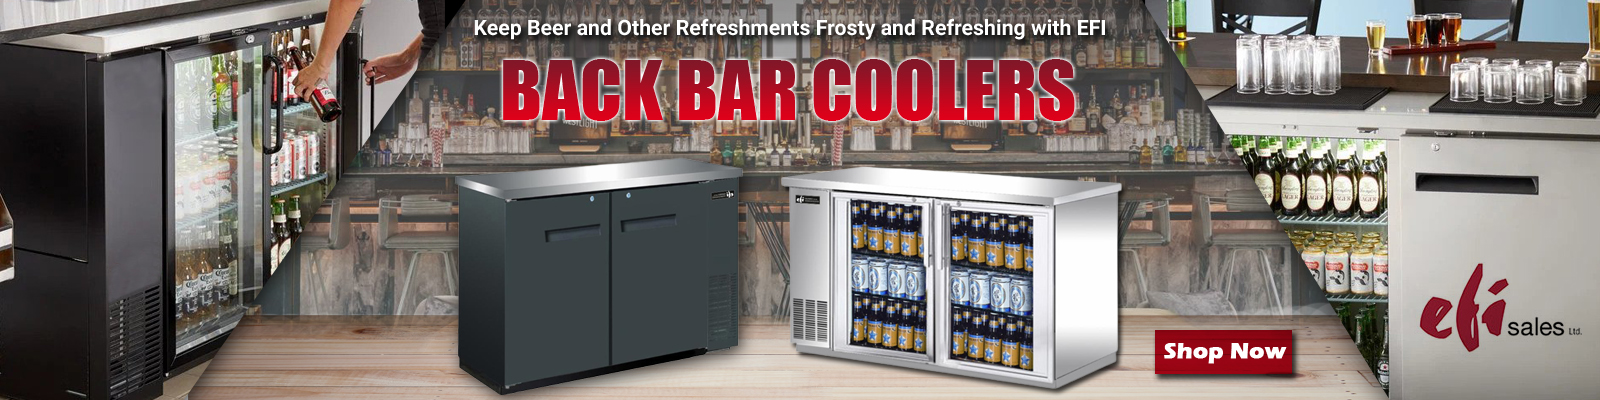 EFI Bar Refrigeration Equipment, Beer Dispensers